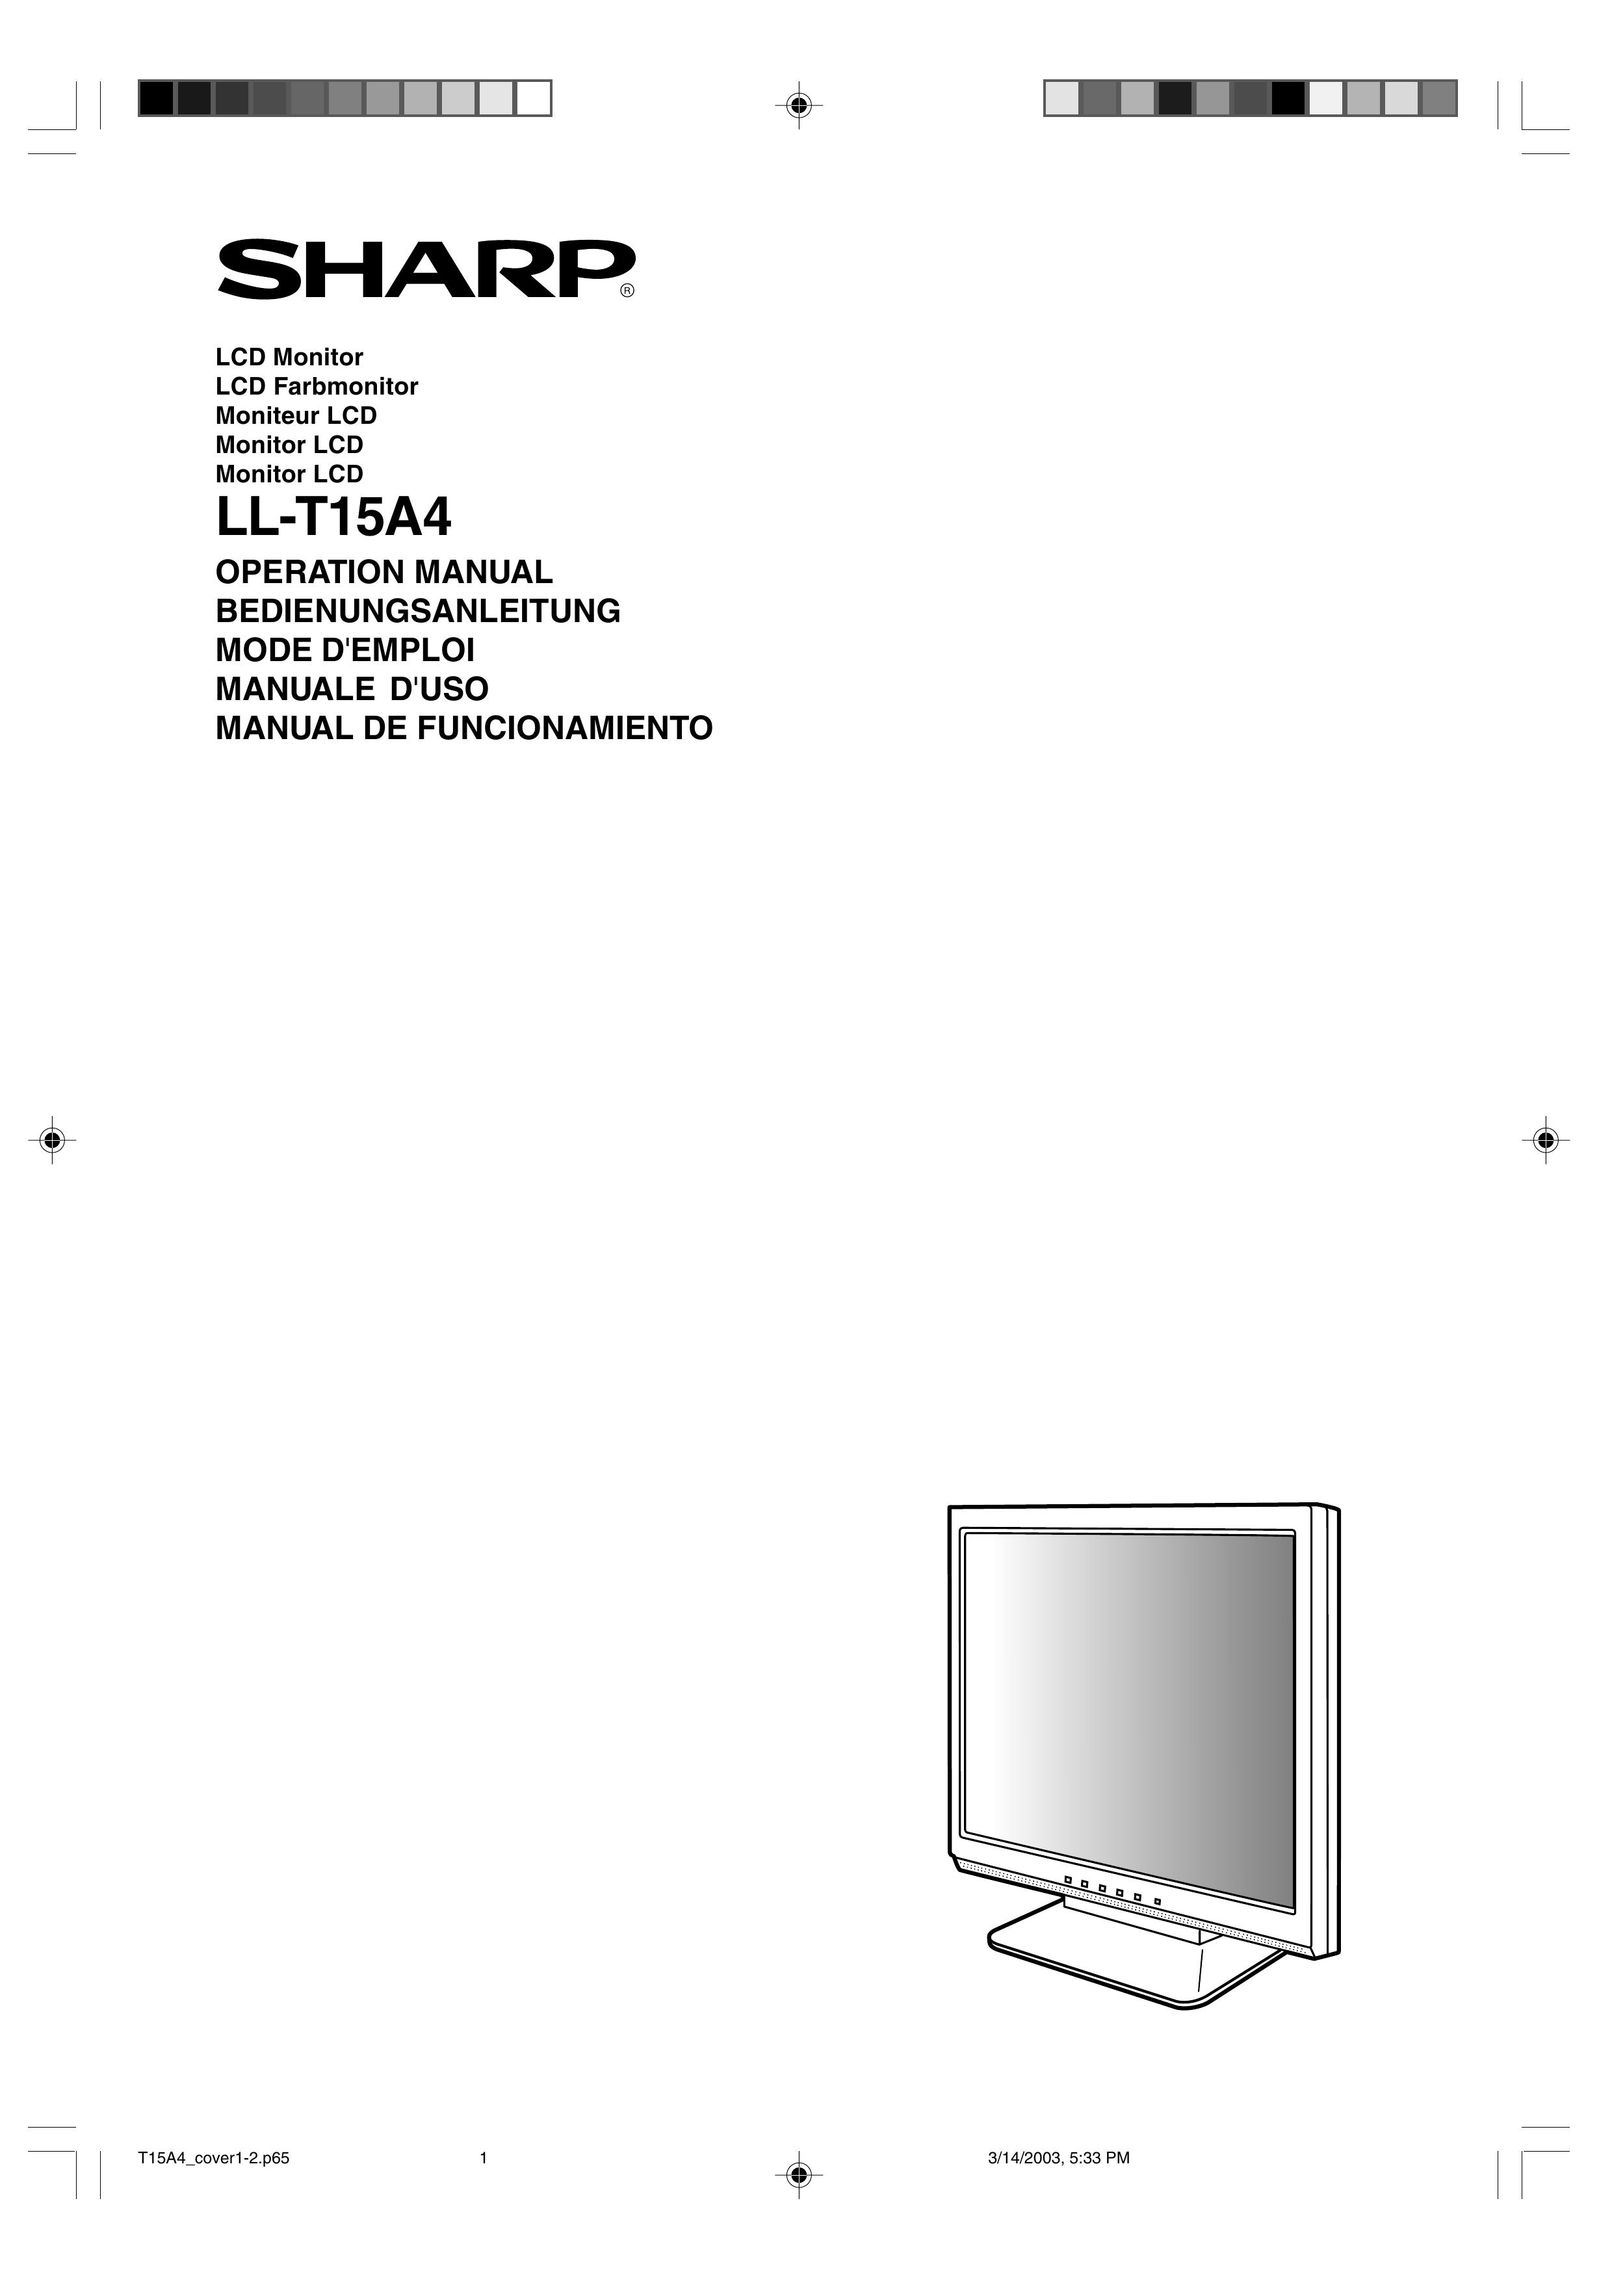 Sharp LL-T15A4 Computer Monitor User Manual